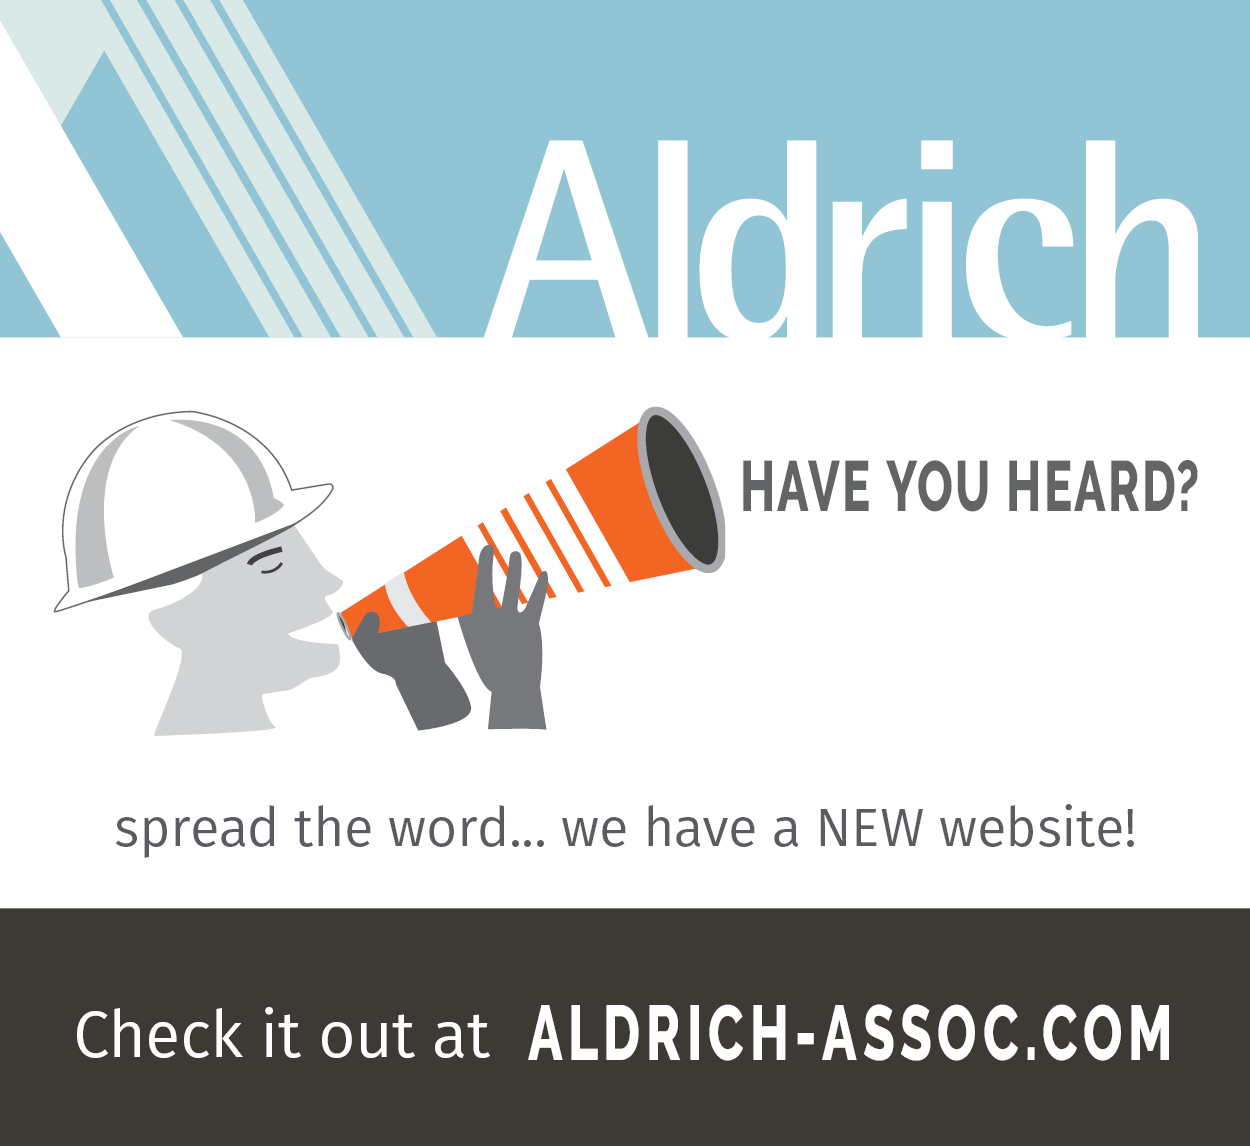 Aldrich has a NEW website!